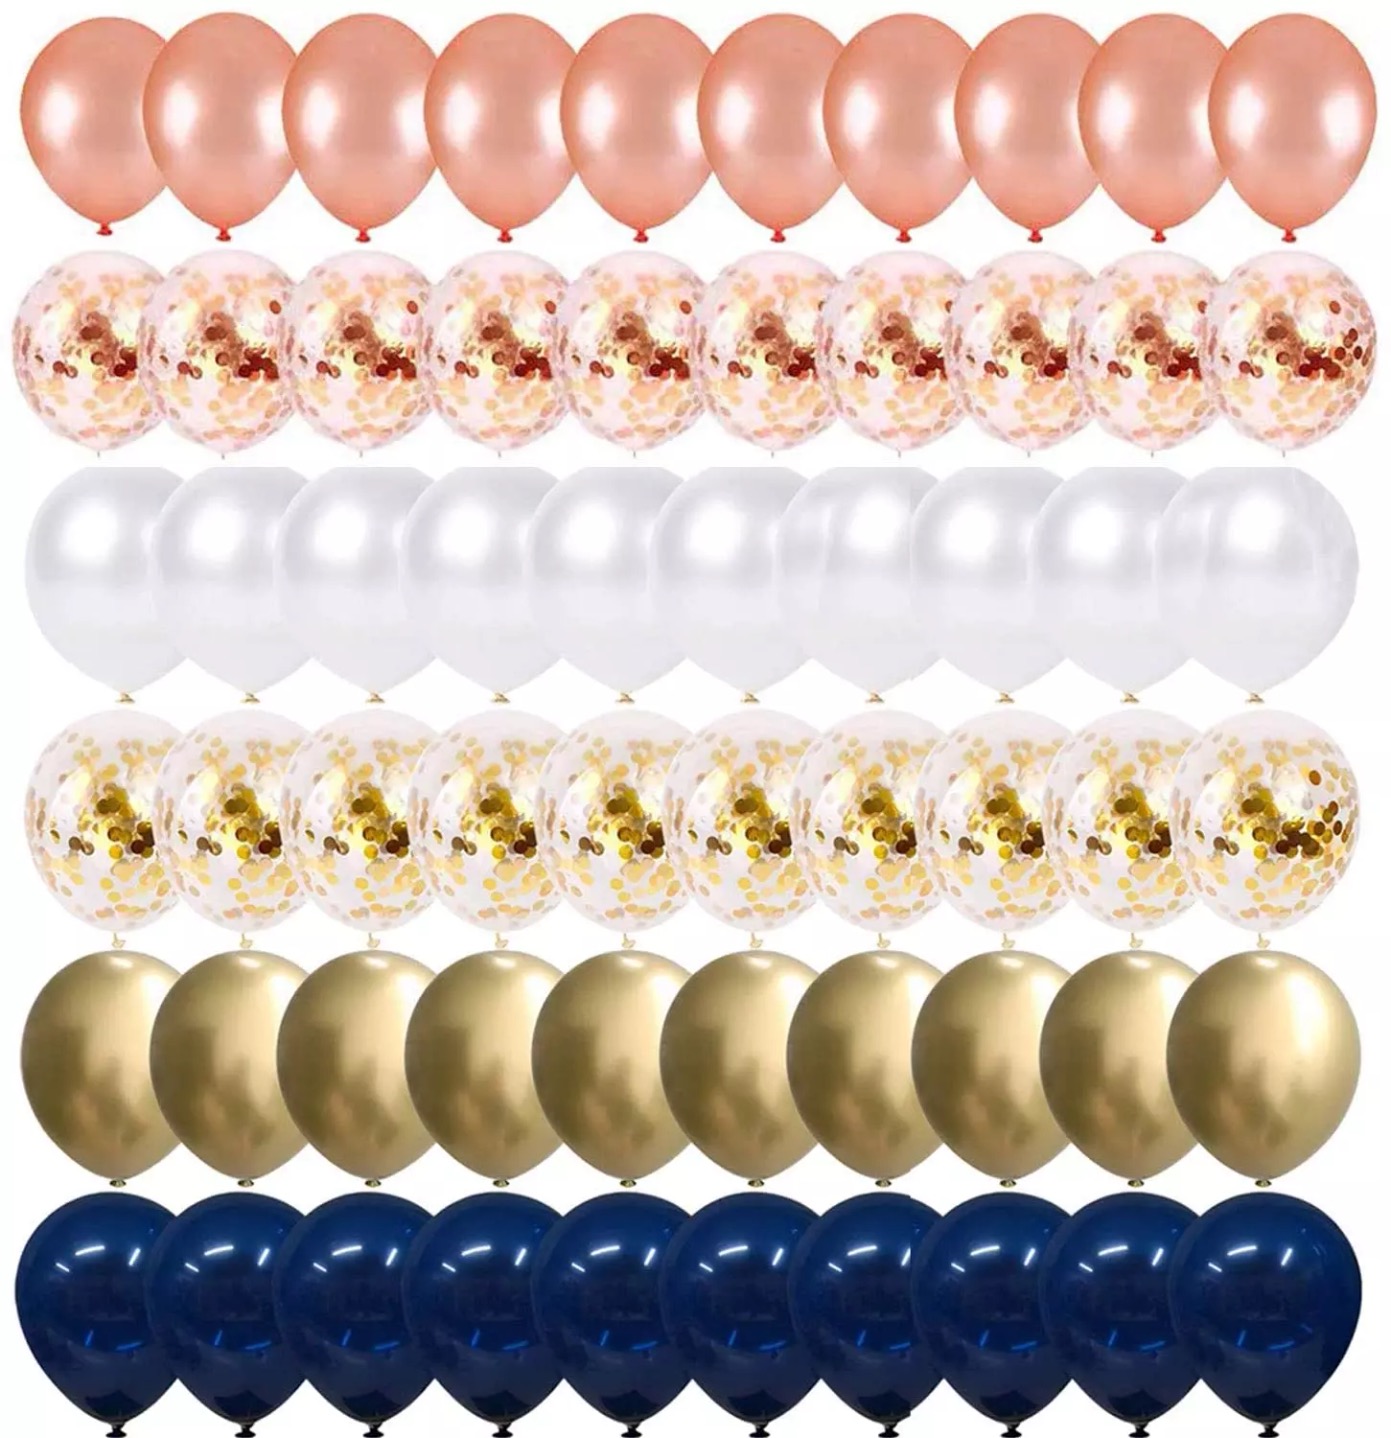 ballongbukett i rosagold metalliska i marin blå ballonger